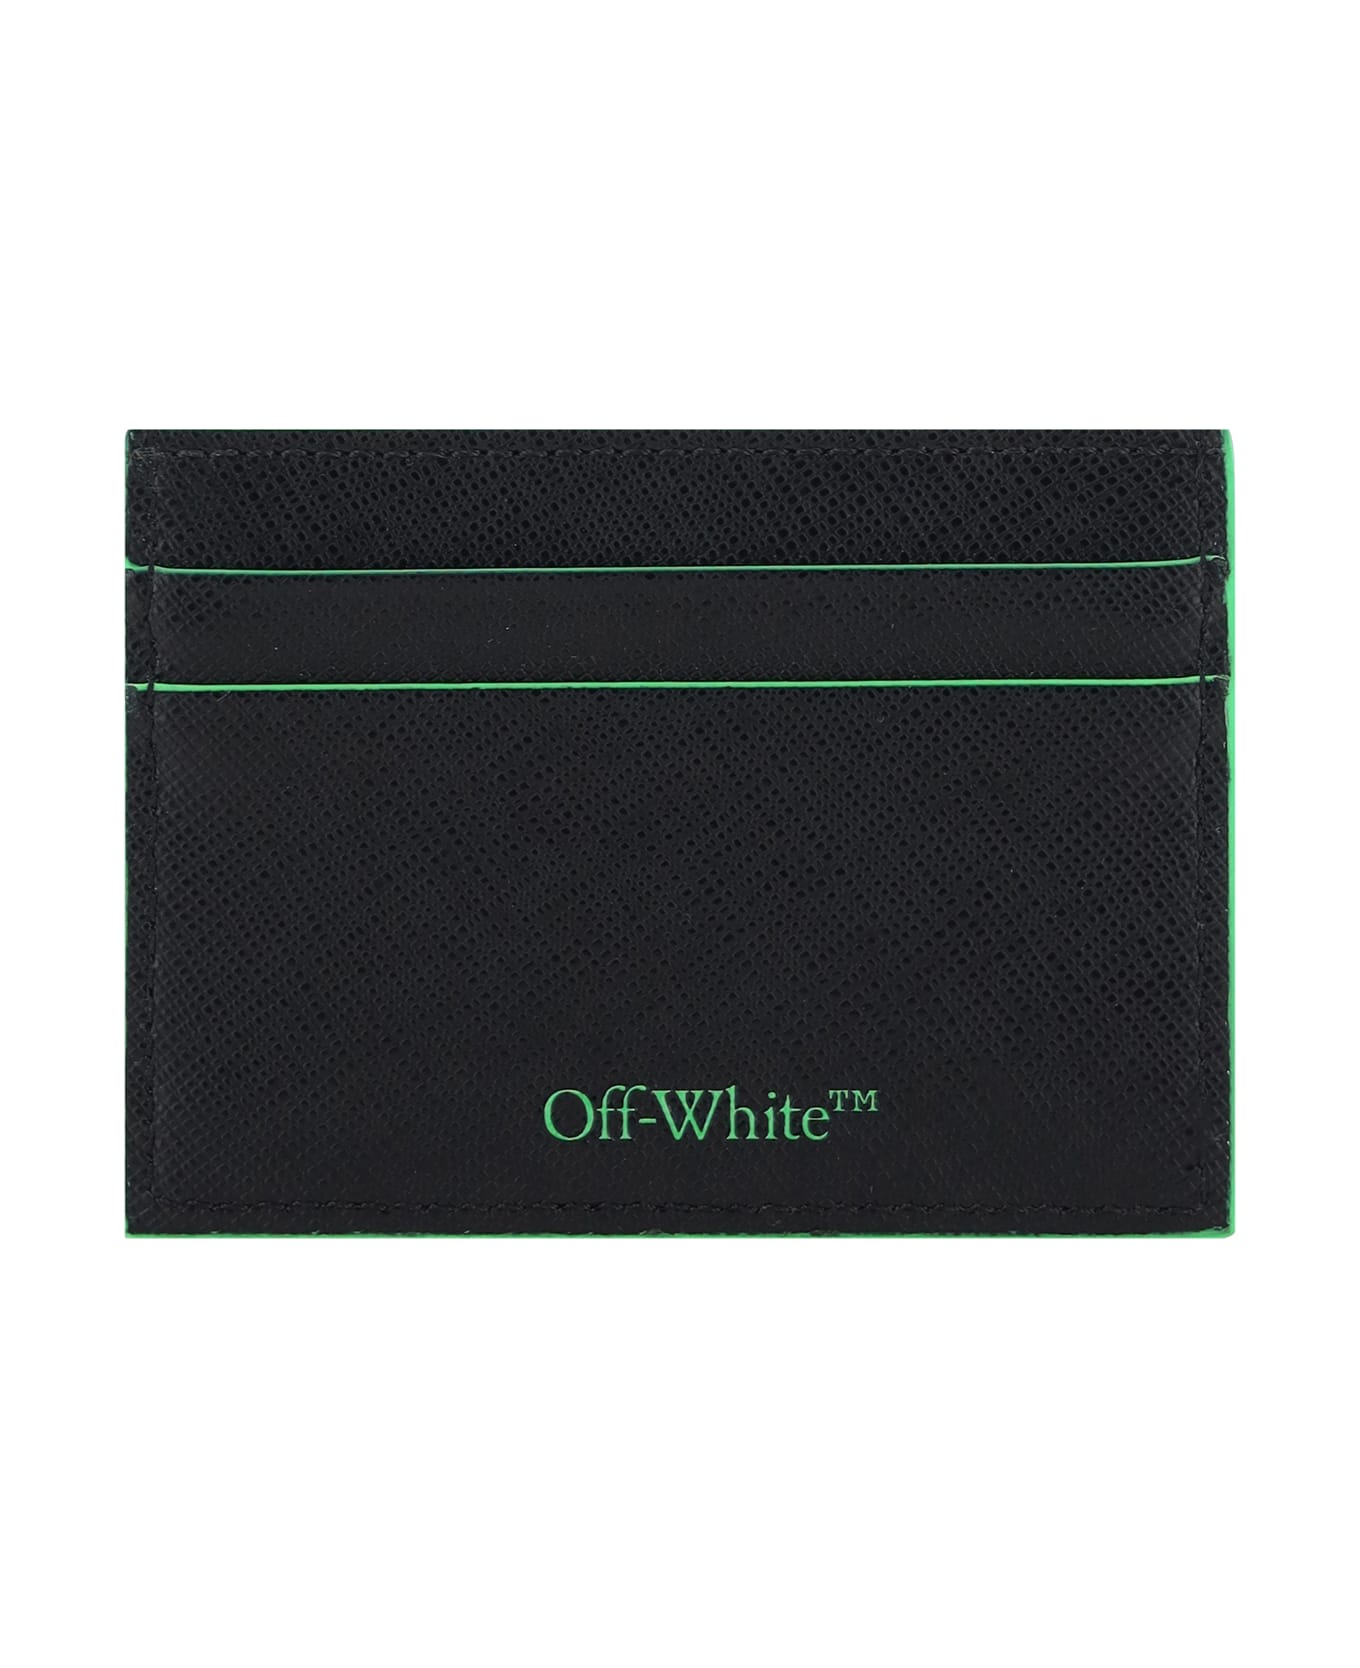 Off-White Card Holder - Black Green Fluo